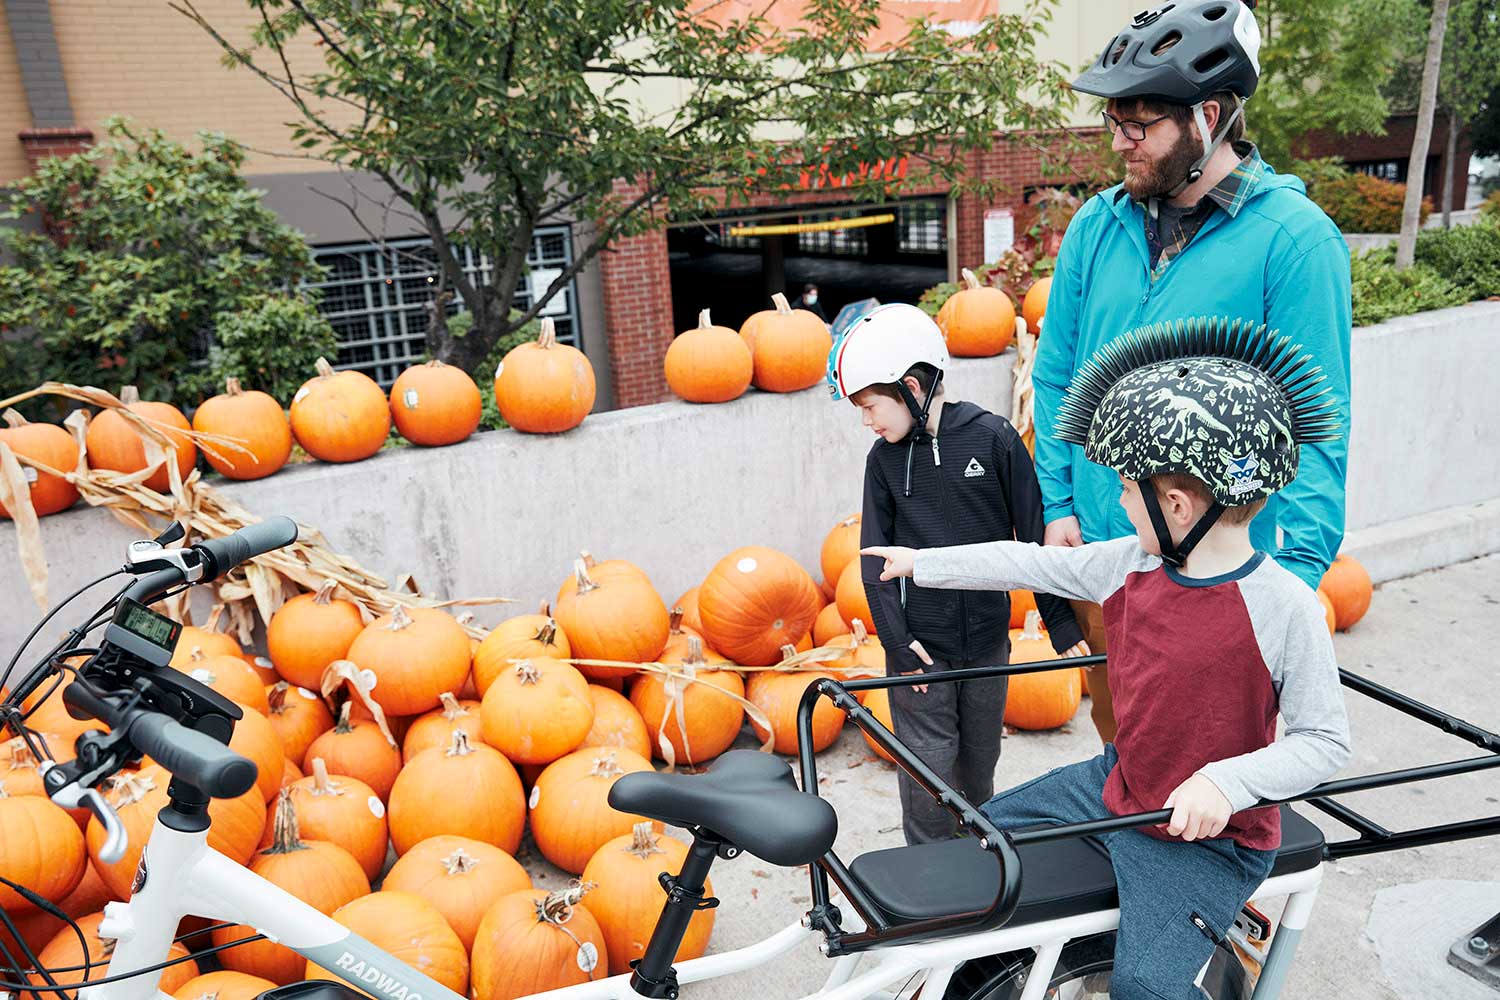 A father and two children pick out pumpkins at a pumpkin patch alongside a RadWagon electric bike.